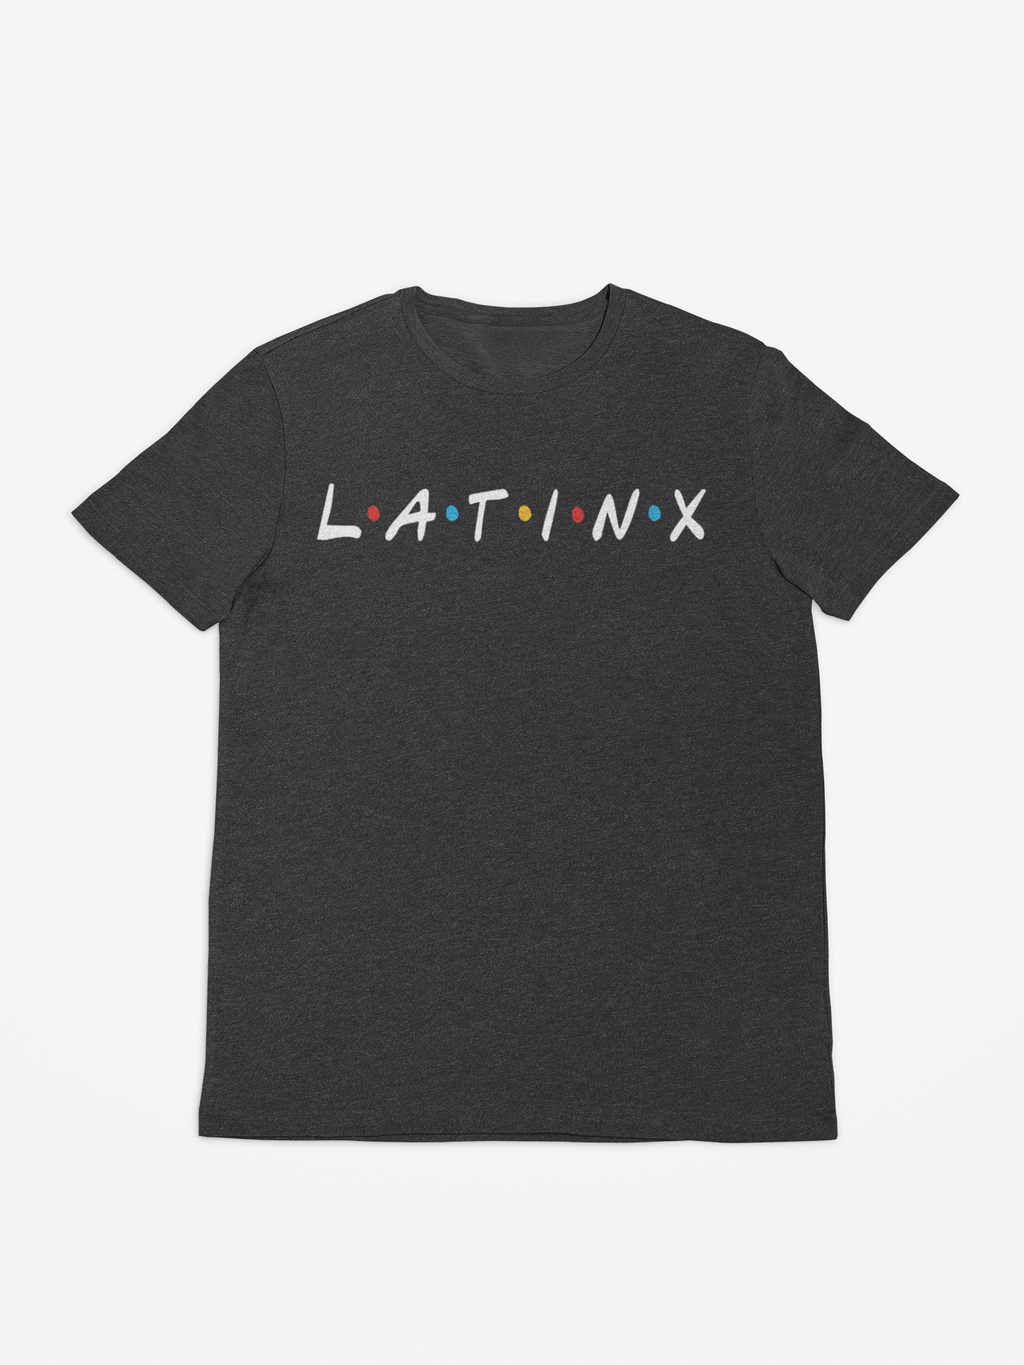 Friends Latinx T-Shirt - Charcoal Grey